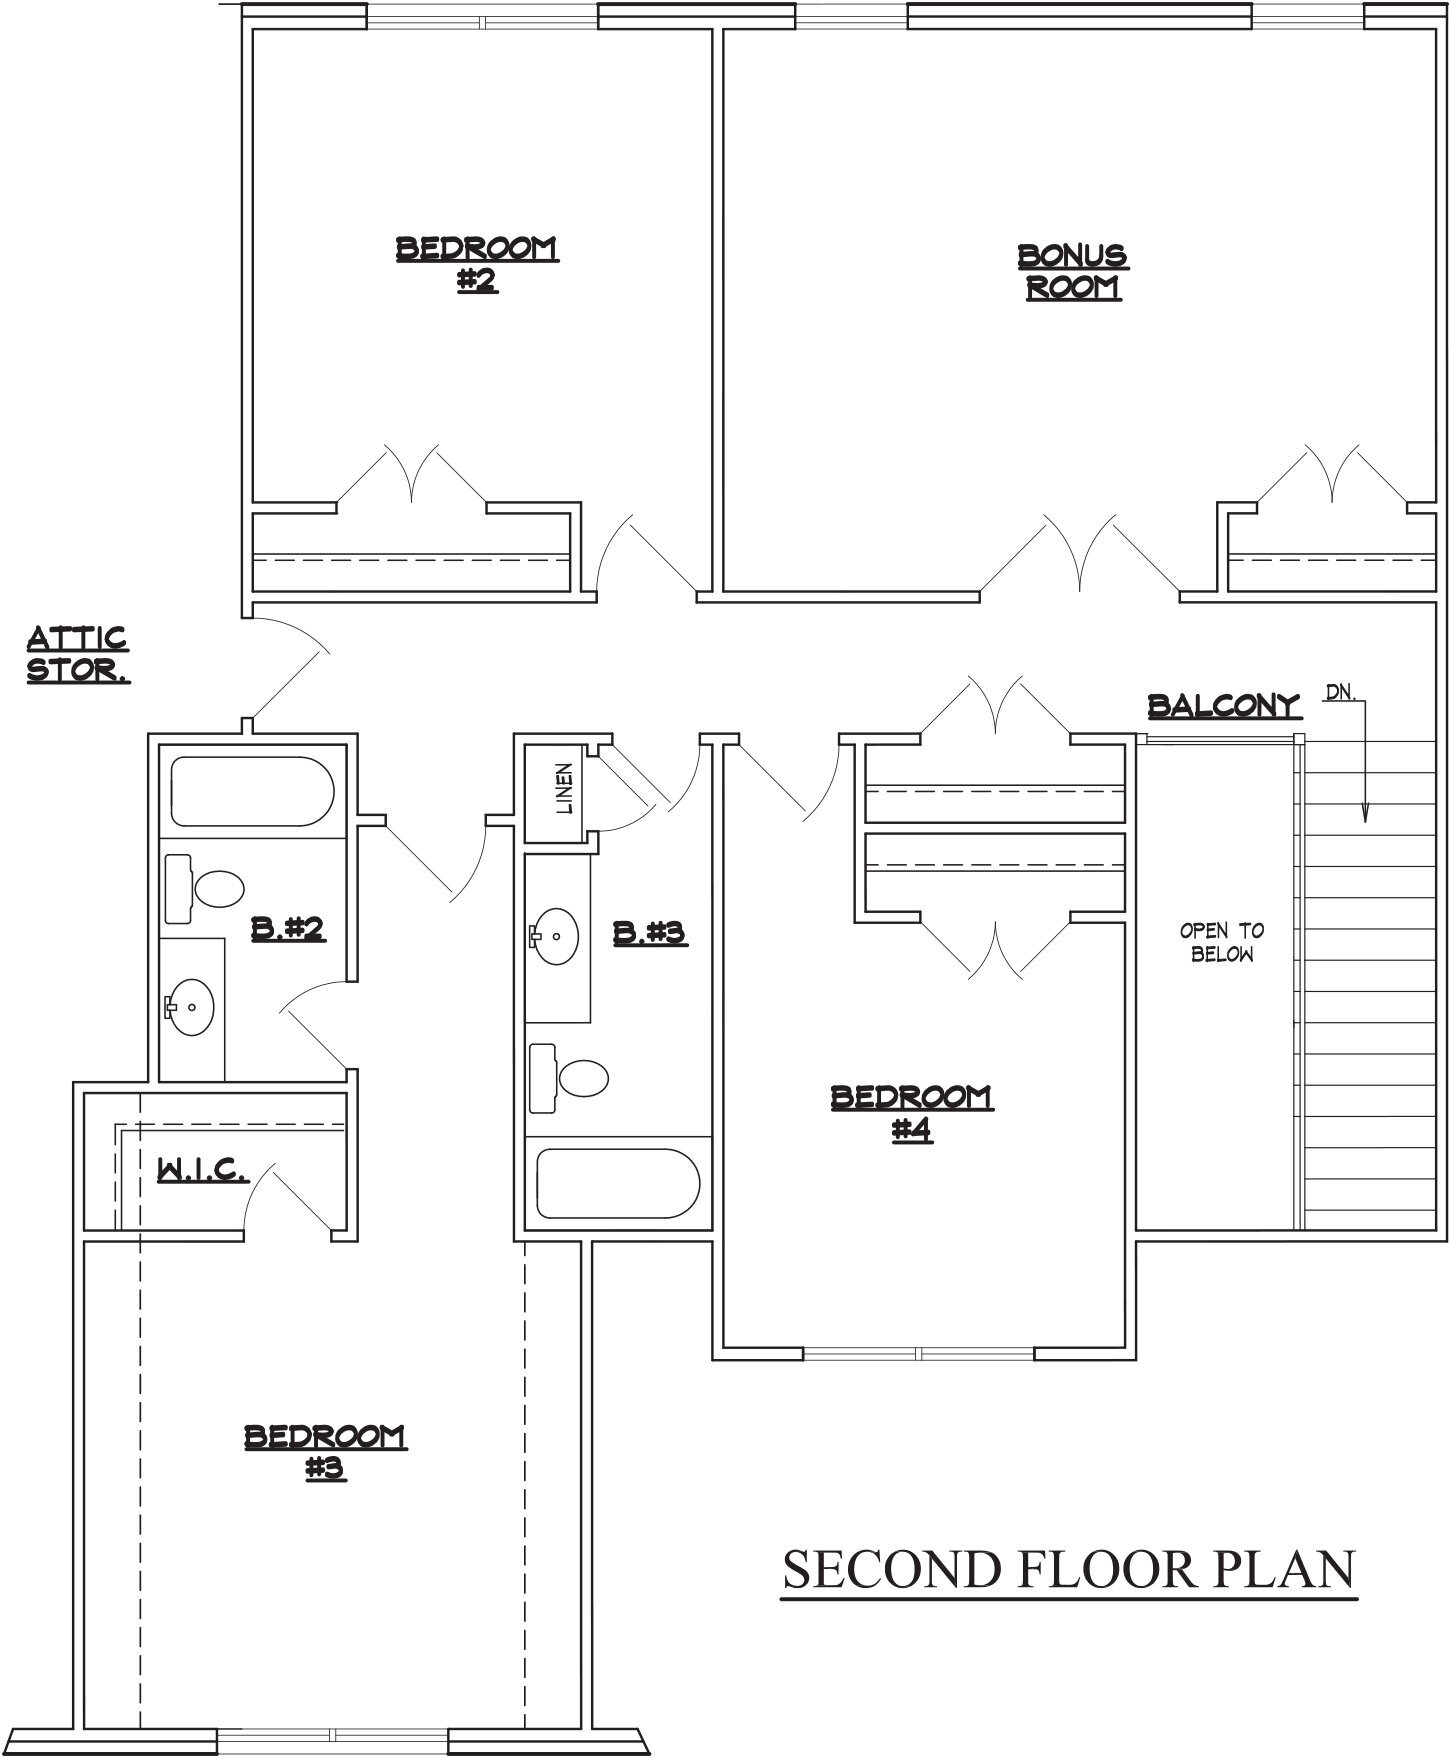 Lot163_FloorplanB